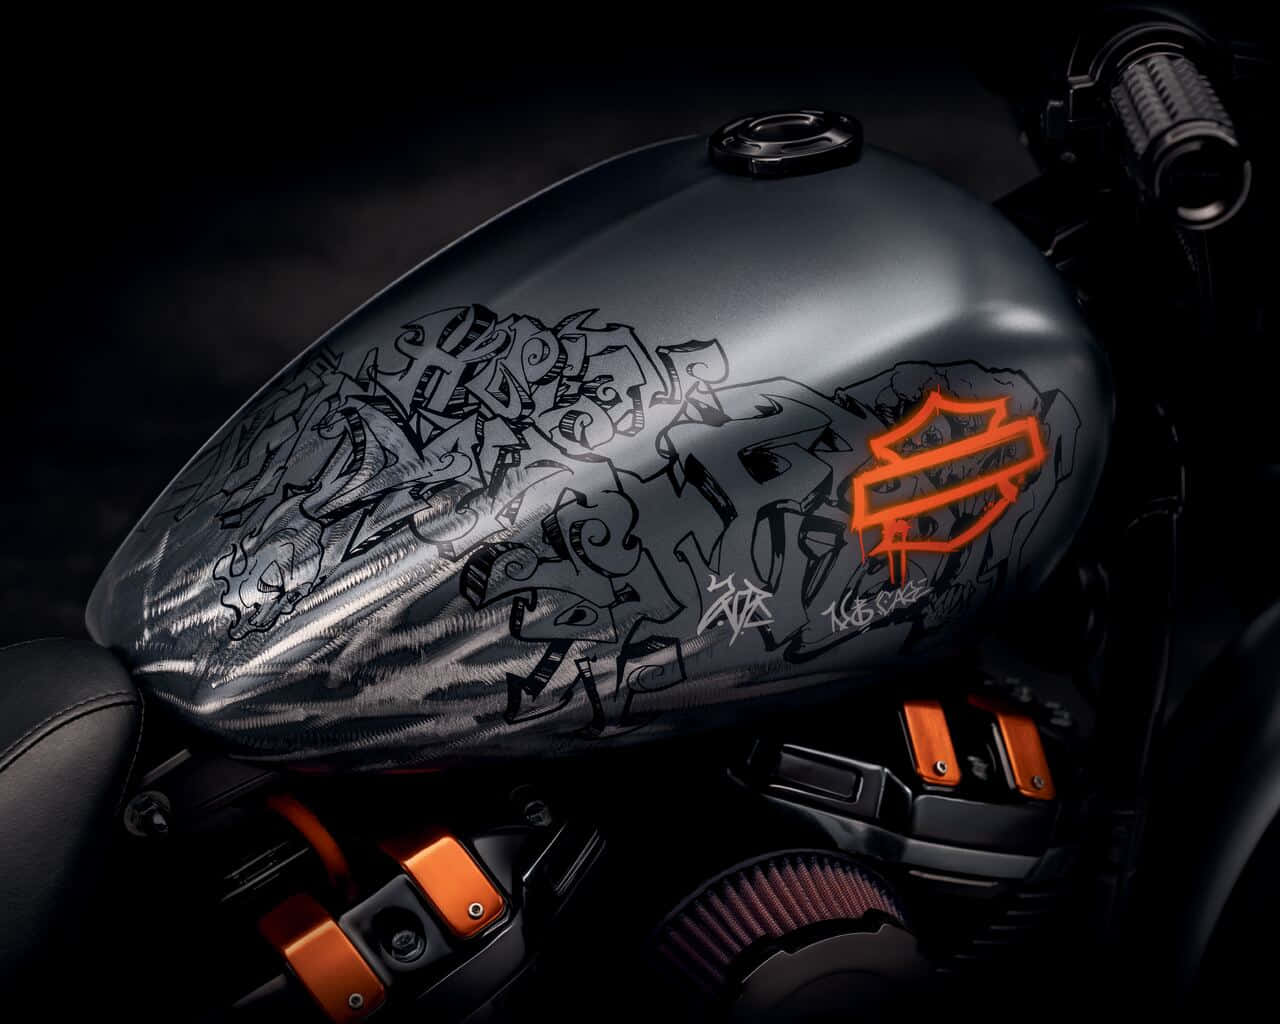 Logode Harley Davidson Con Fondo De Diseño Tribal.